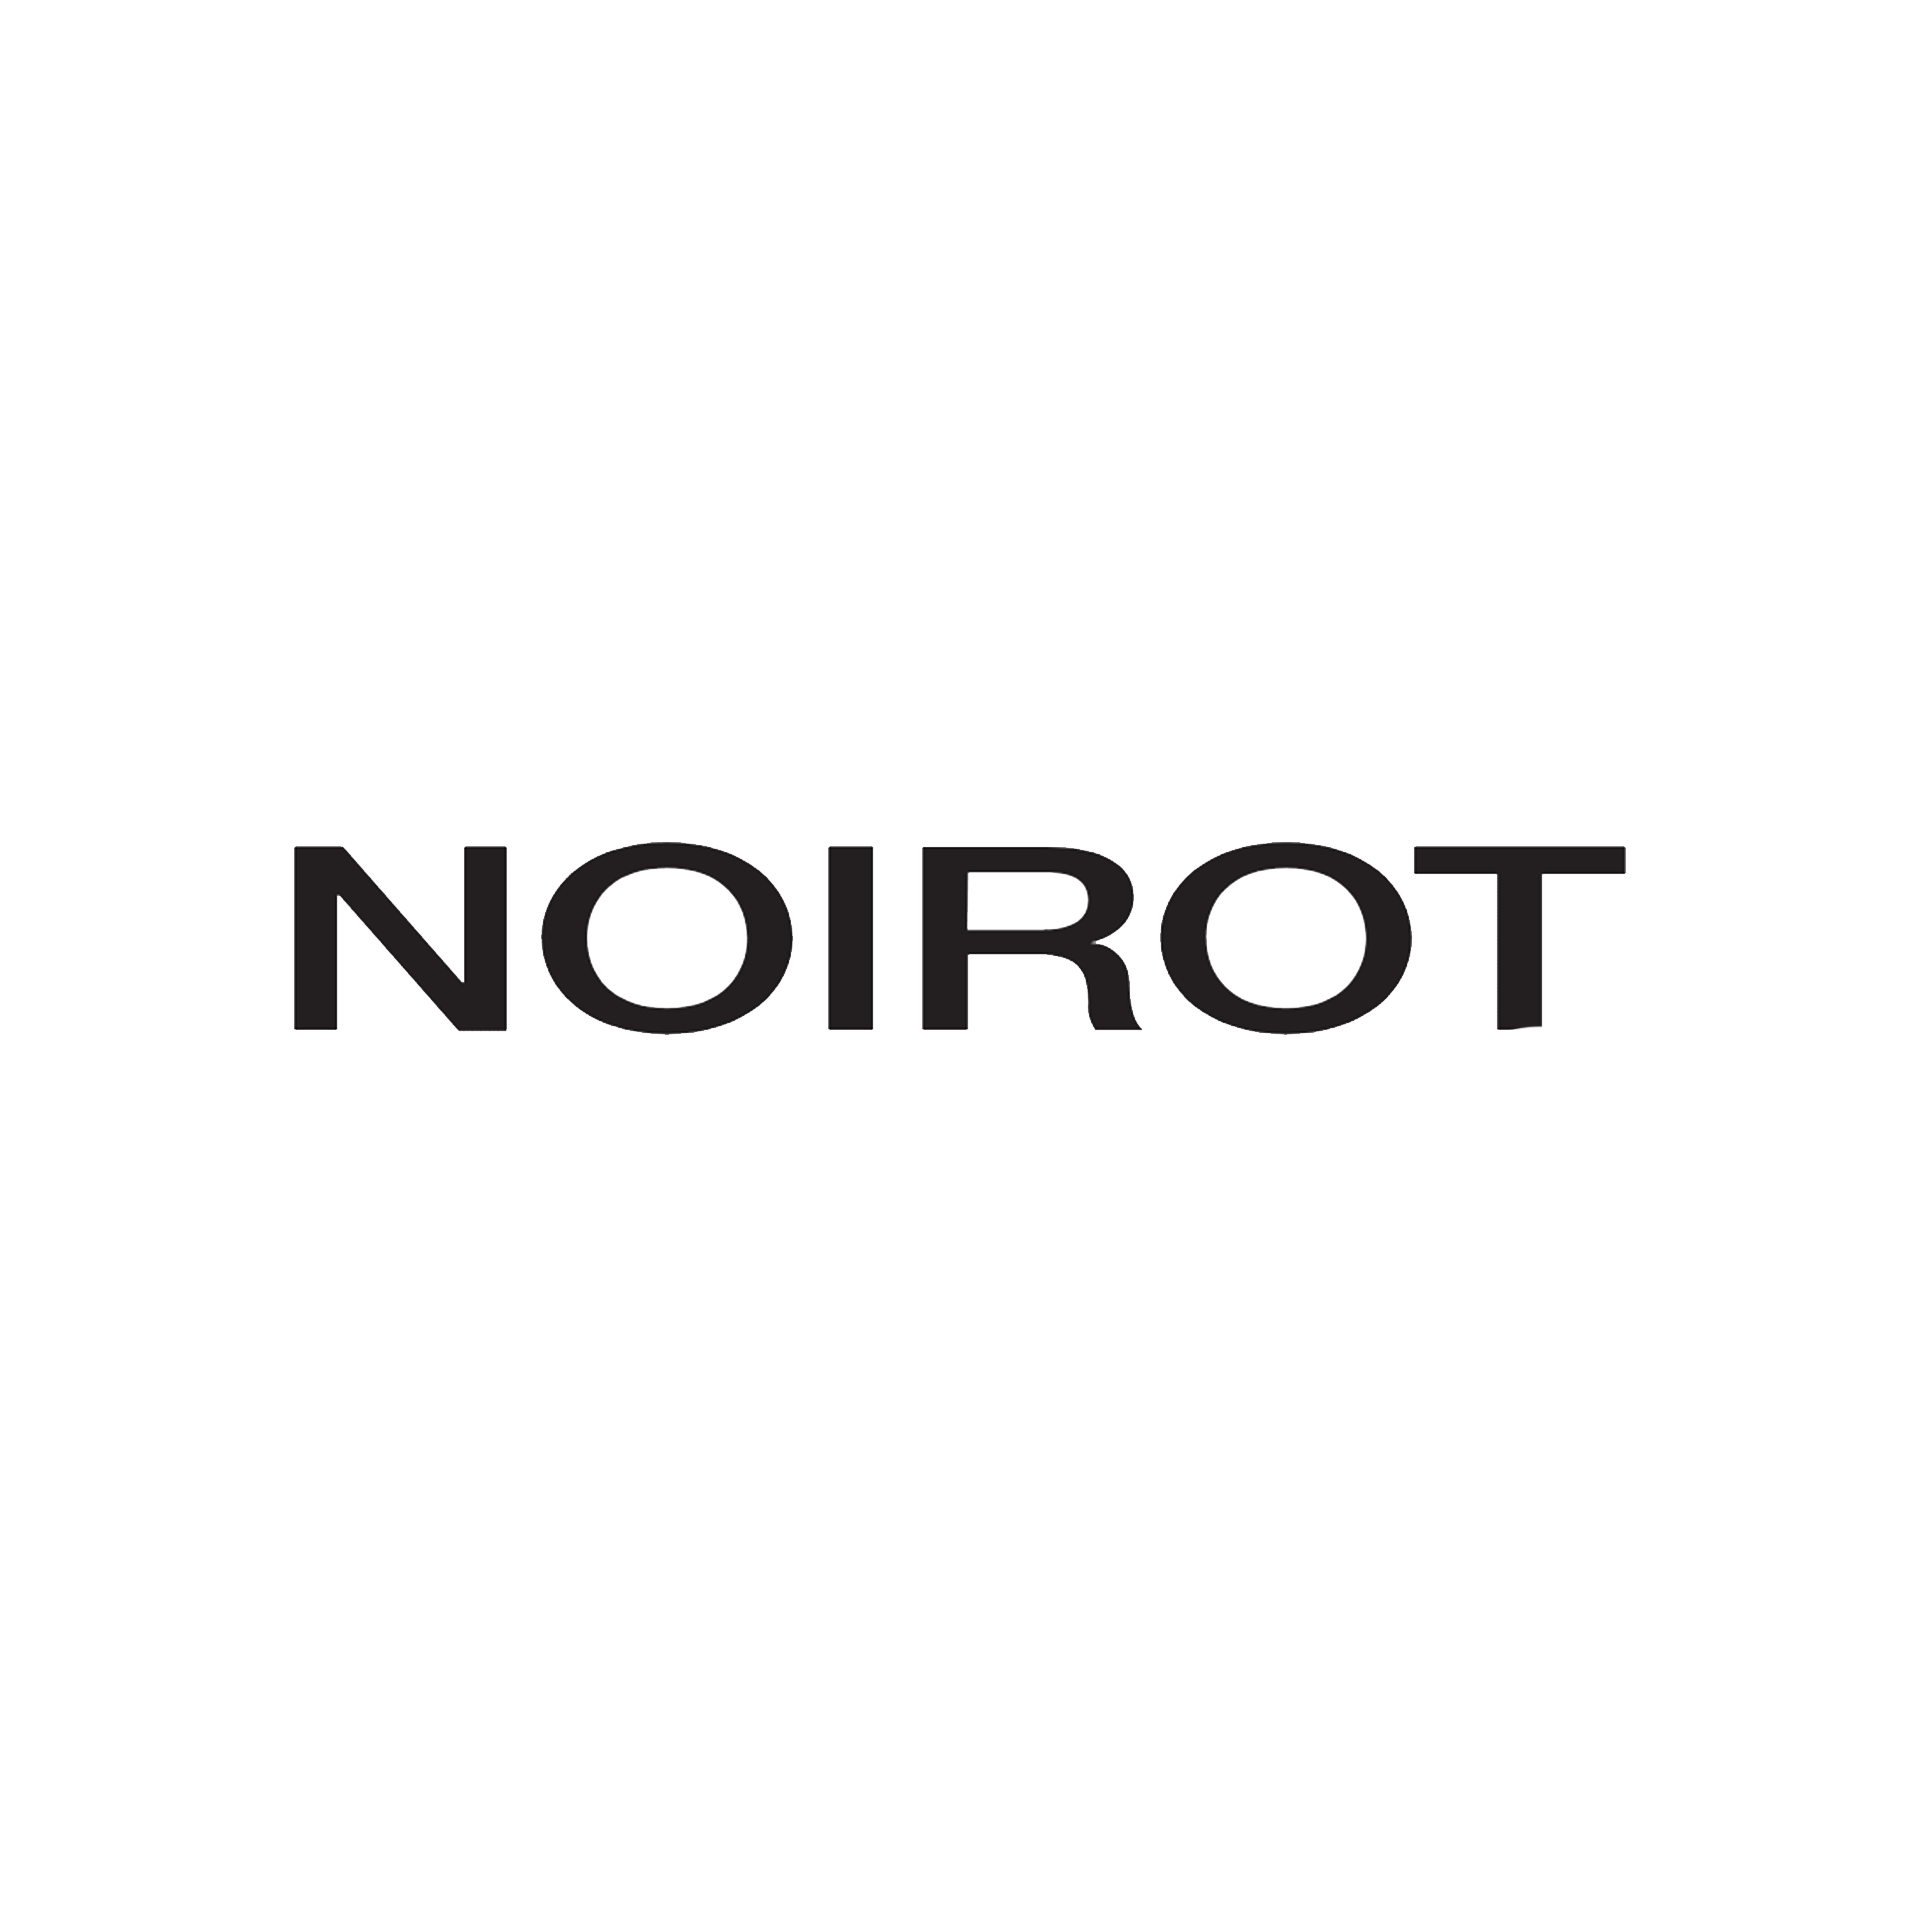 Noirot logo on white background